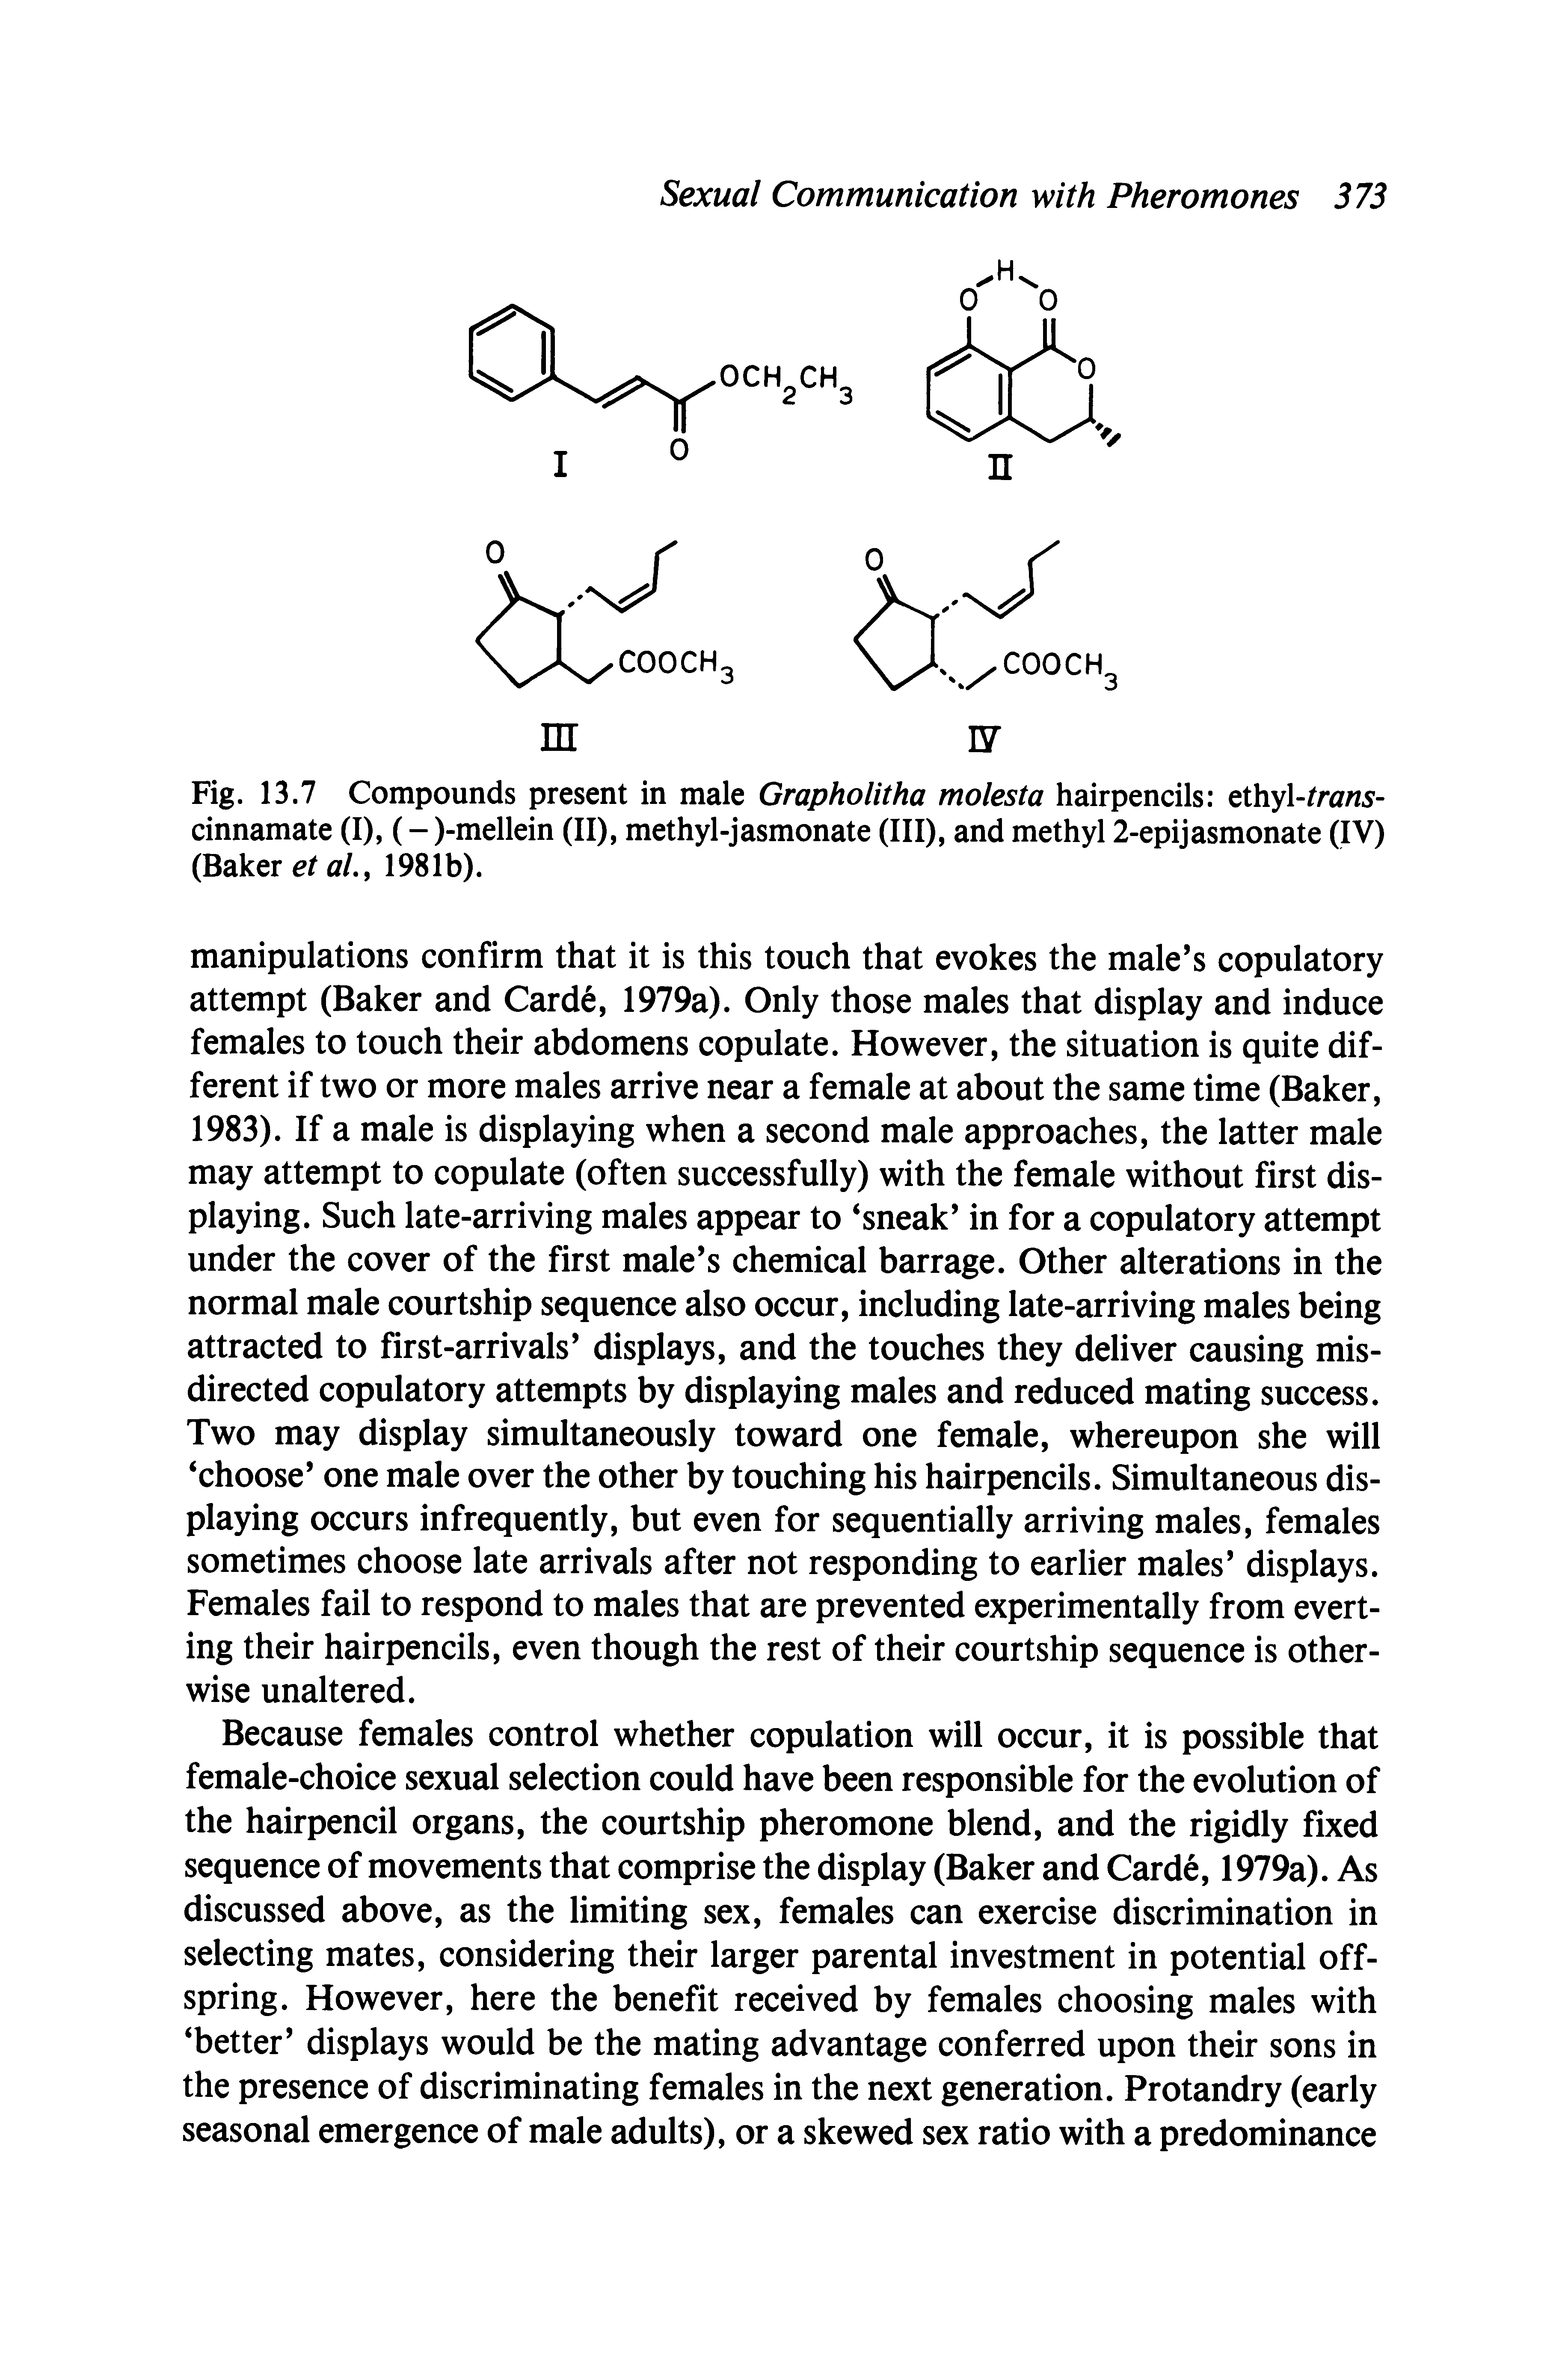 Fig. 13.7 Compounds present in male Grapholitha molesta hairpencils ethyl-tran -cinnamate (I), (-)-mellein (II), methyl-jasmonate (III), and methyl 2-epijasmonate (IV) (Baker eta/., 1981b).